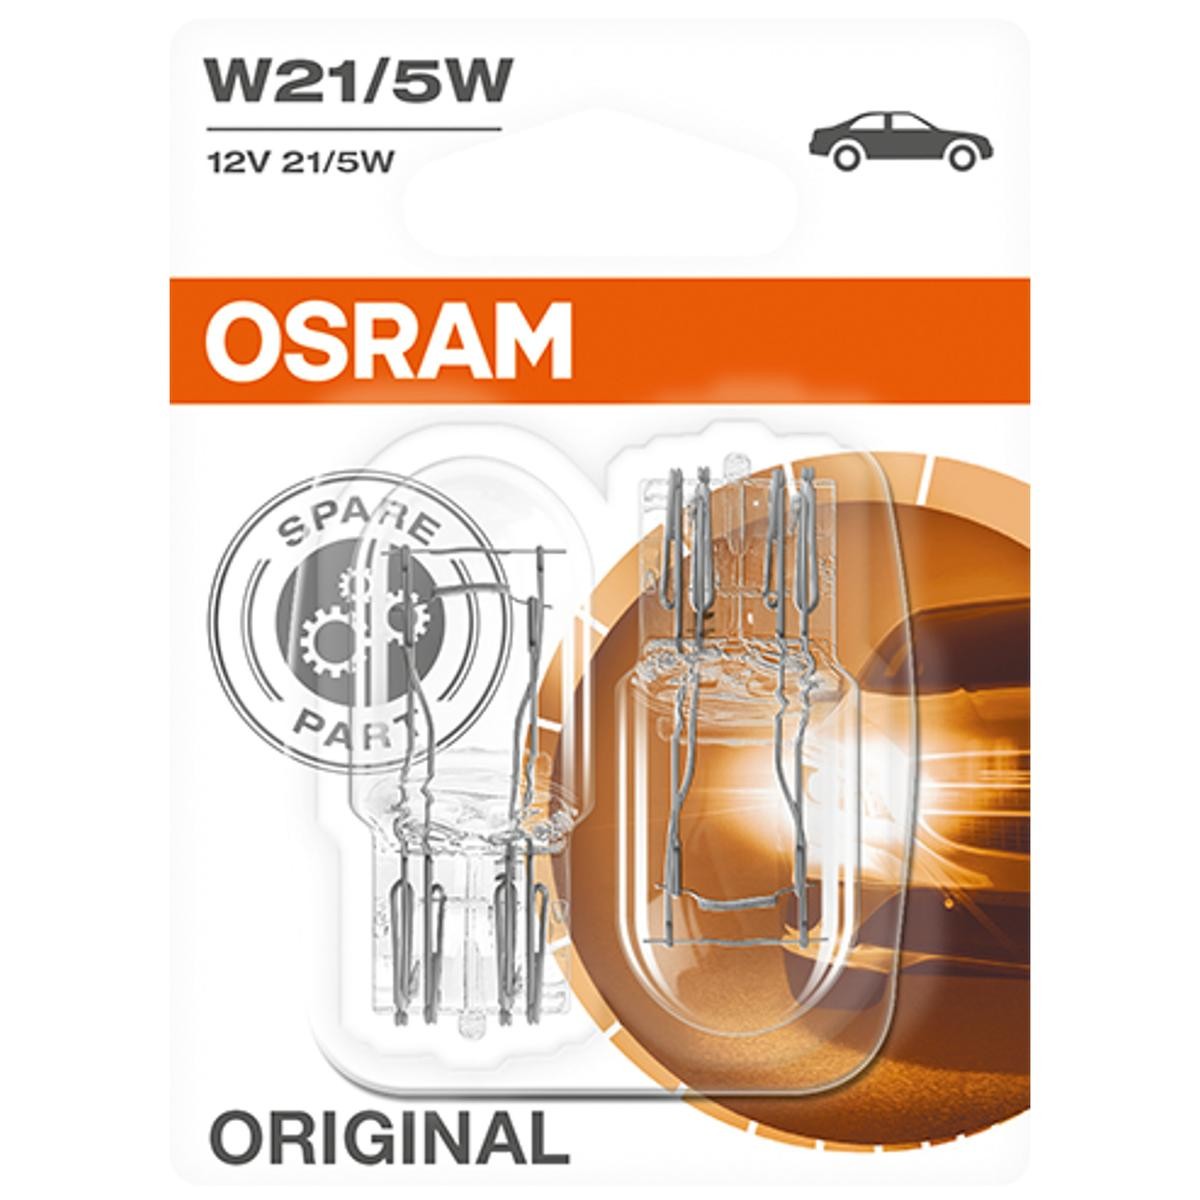 OSRAM 7515-02B Blinker Lampe W21/5W, 12V 21/5W, ORIGINAL Ford in Original Qualität